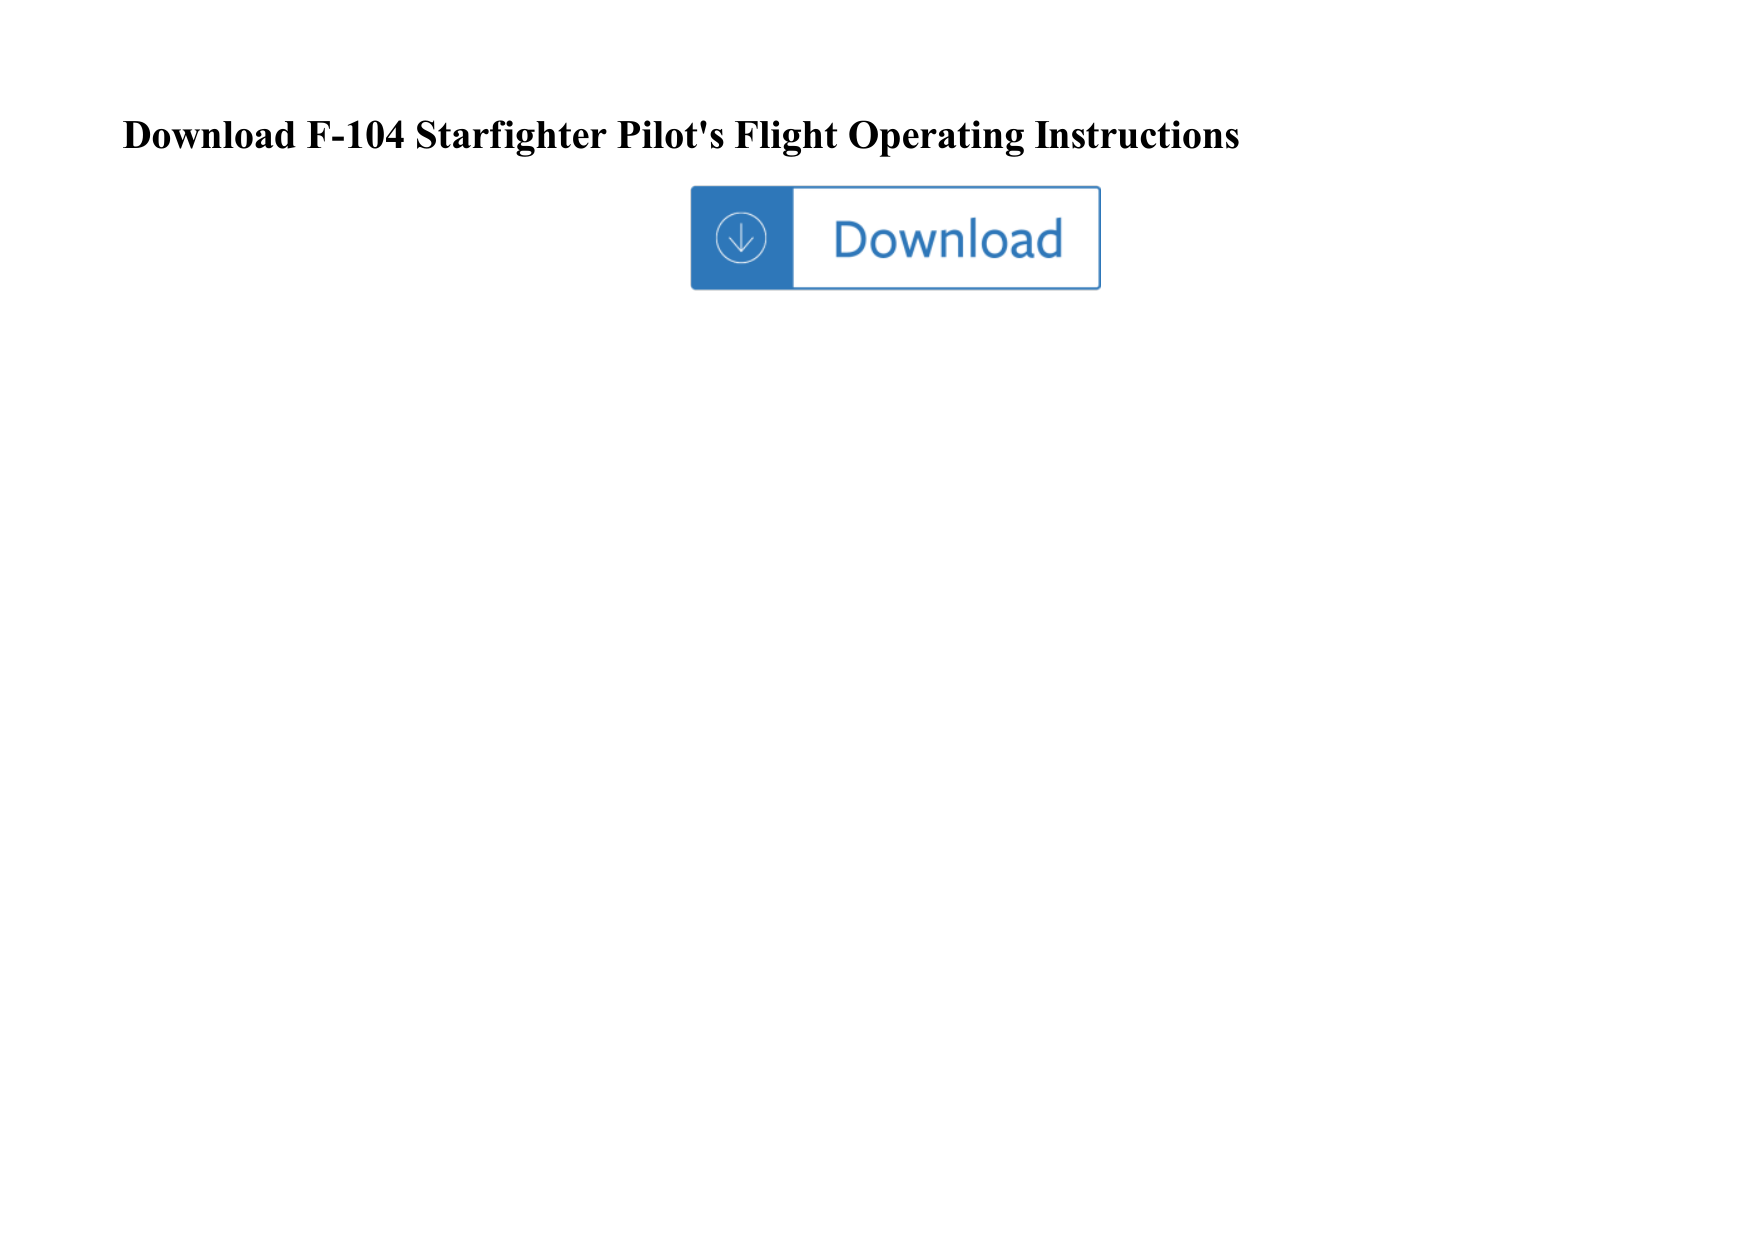 Page 1 of 1 - F-104 Starfighter Pilot's Flight Operating Instructions F-104-starfighter-pilot-s-flight-operating-instructions